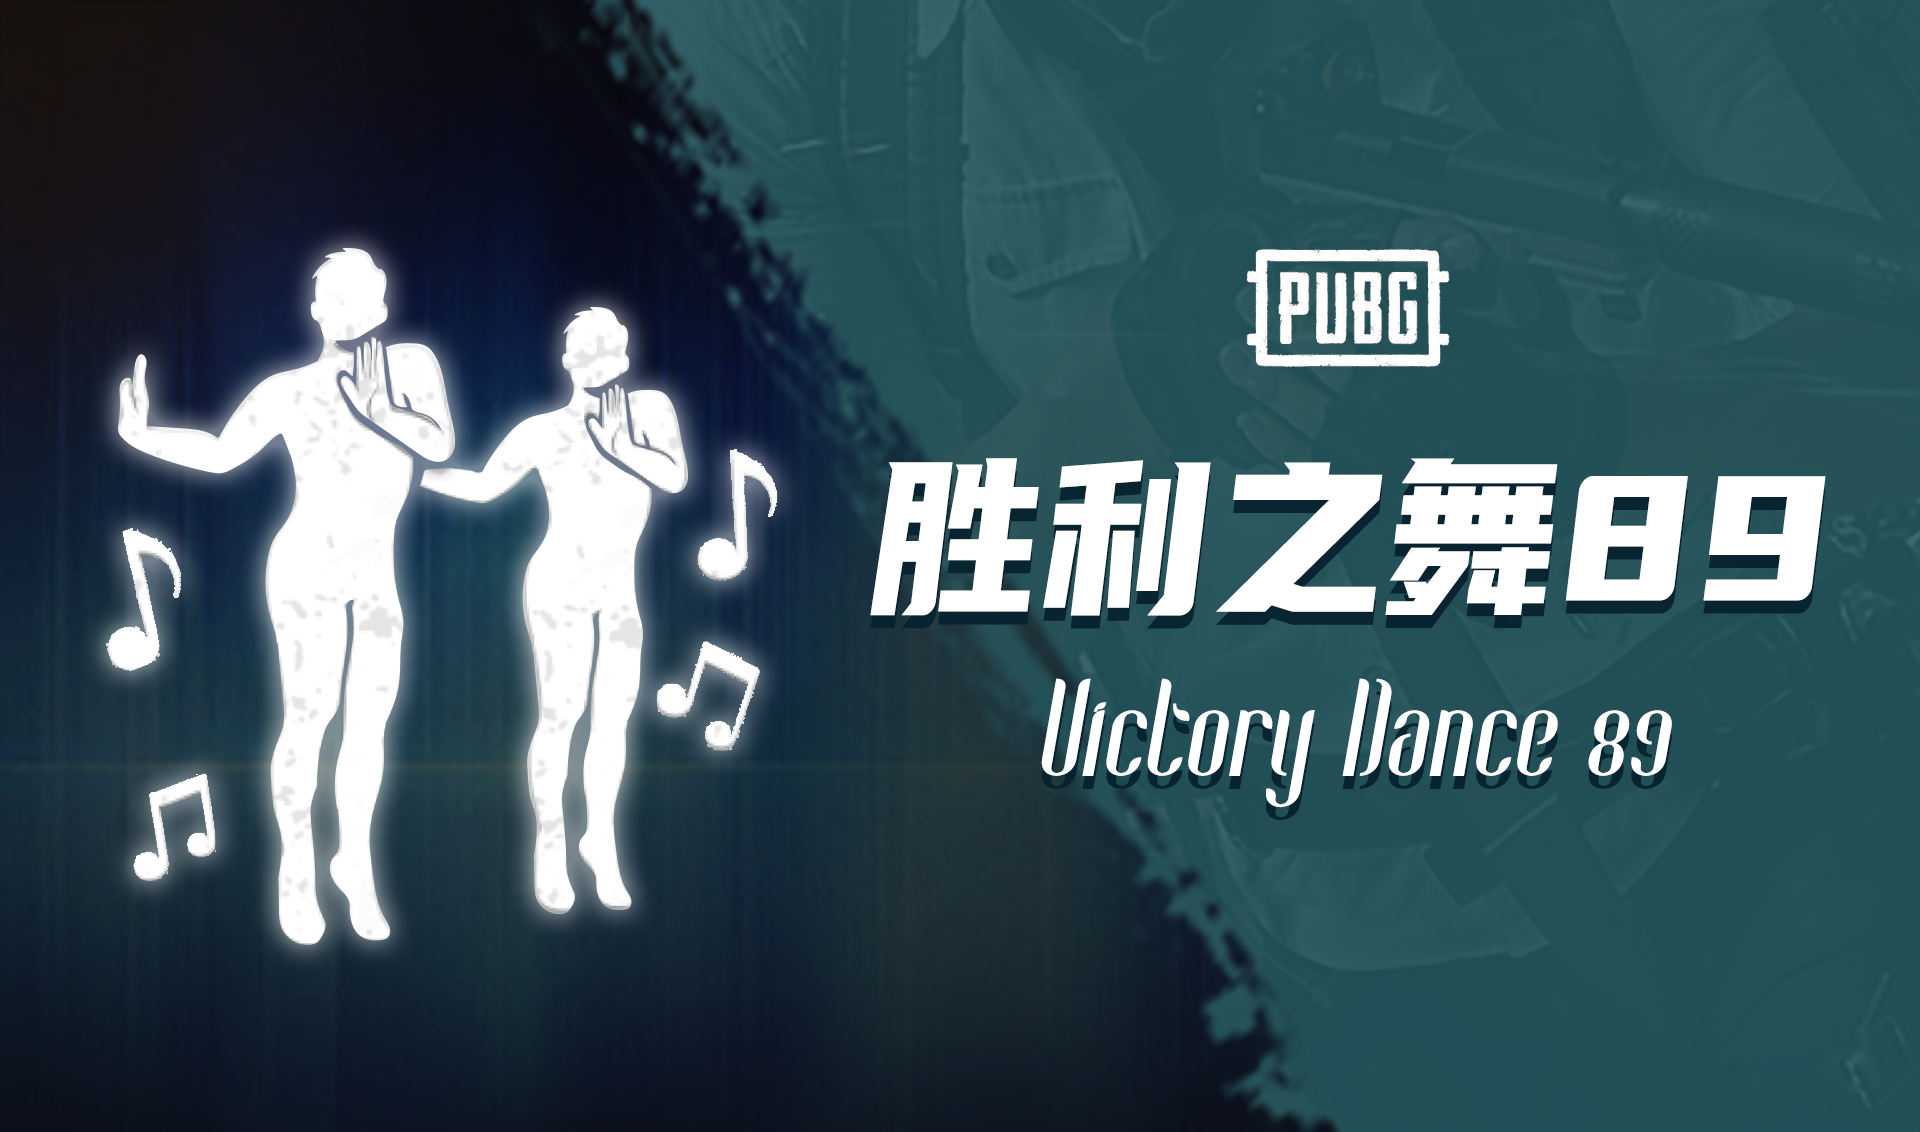 PUBG 胜利之舞89 Victory Dance 89